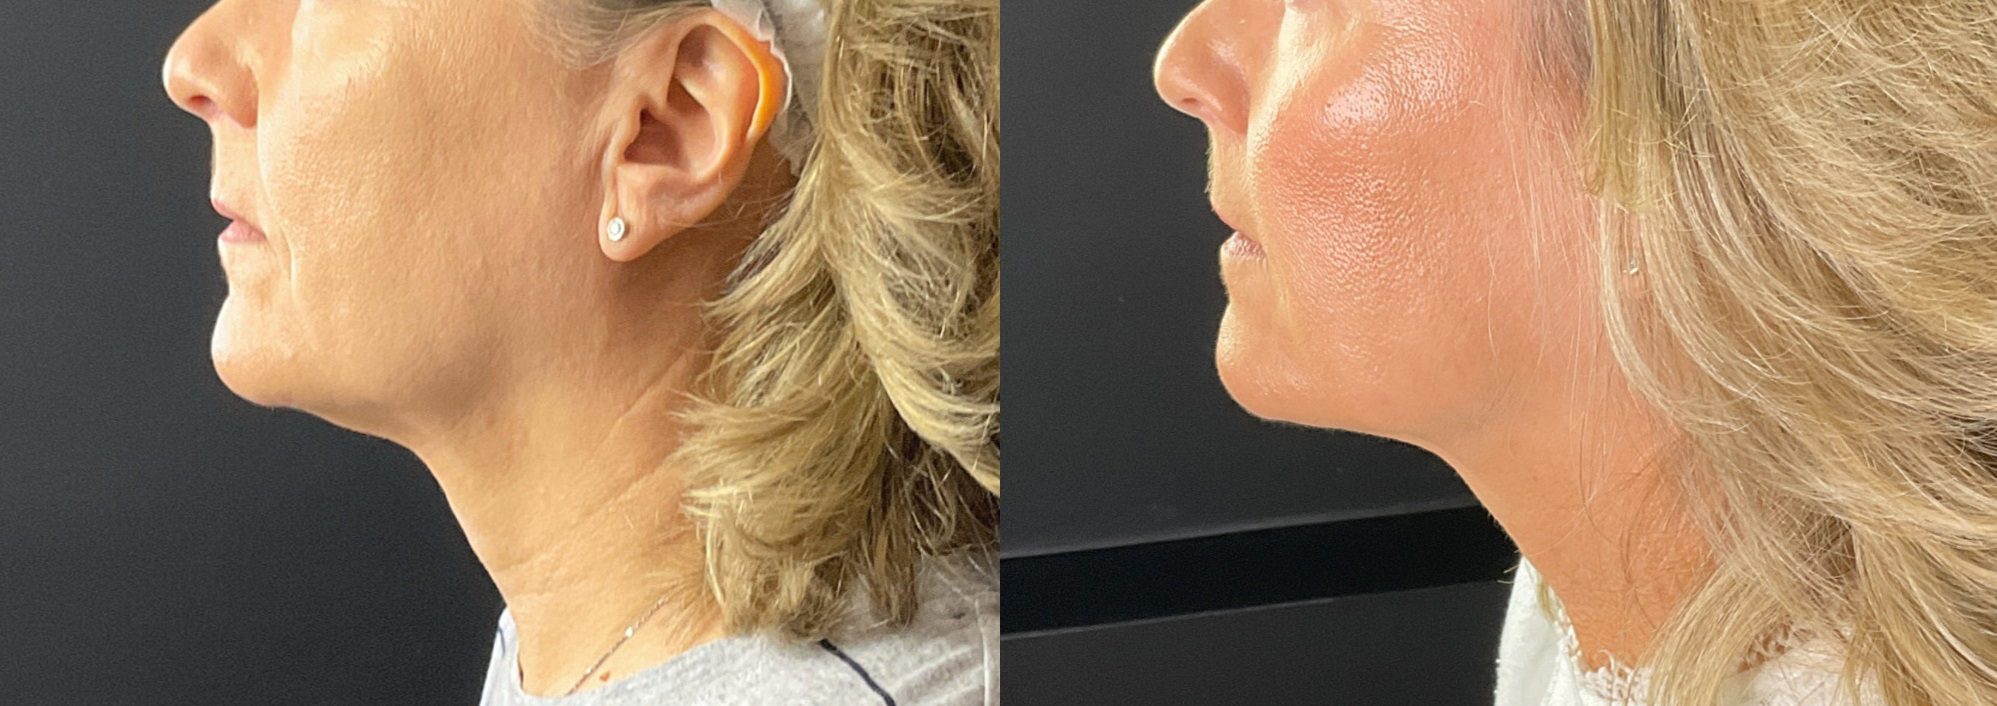 Morpheus8 Dermal Filler lower face Before and After